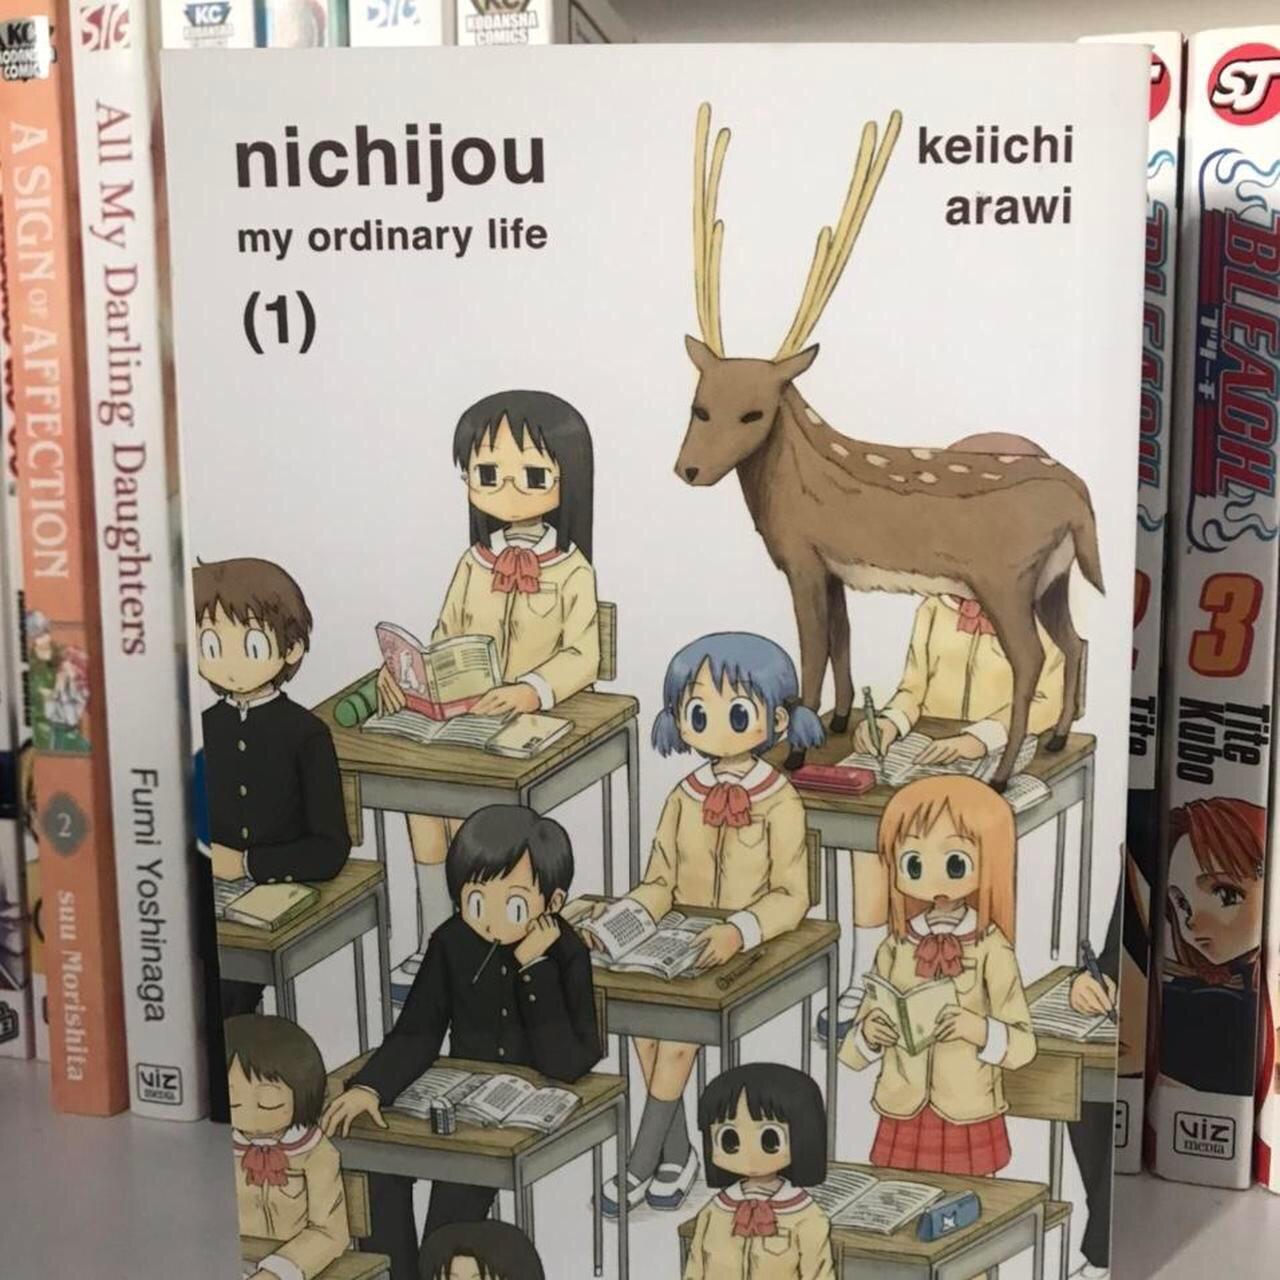 nichijou | Nichijou, Awesome anime, Anime